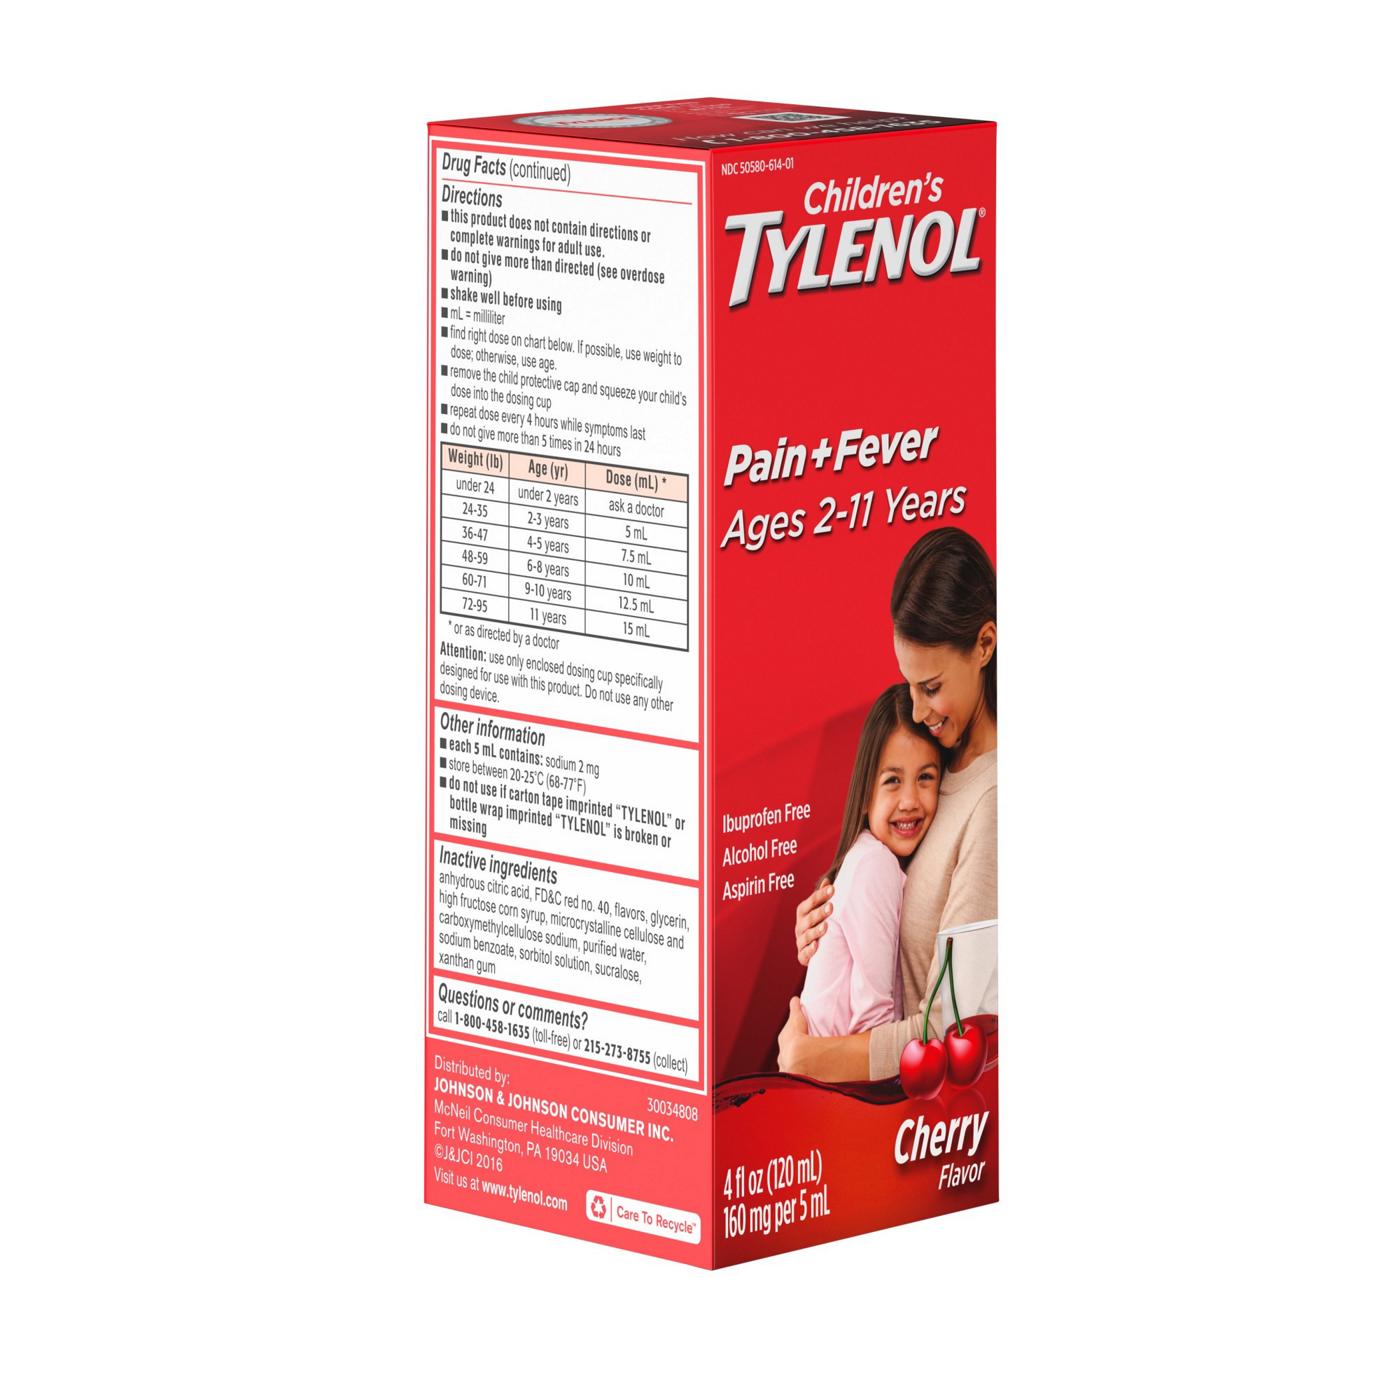 Tylenol Children's Pain + Fever Oral Suspension - Cherry; image 3 of 5